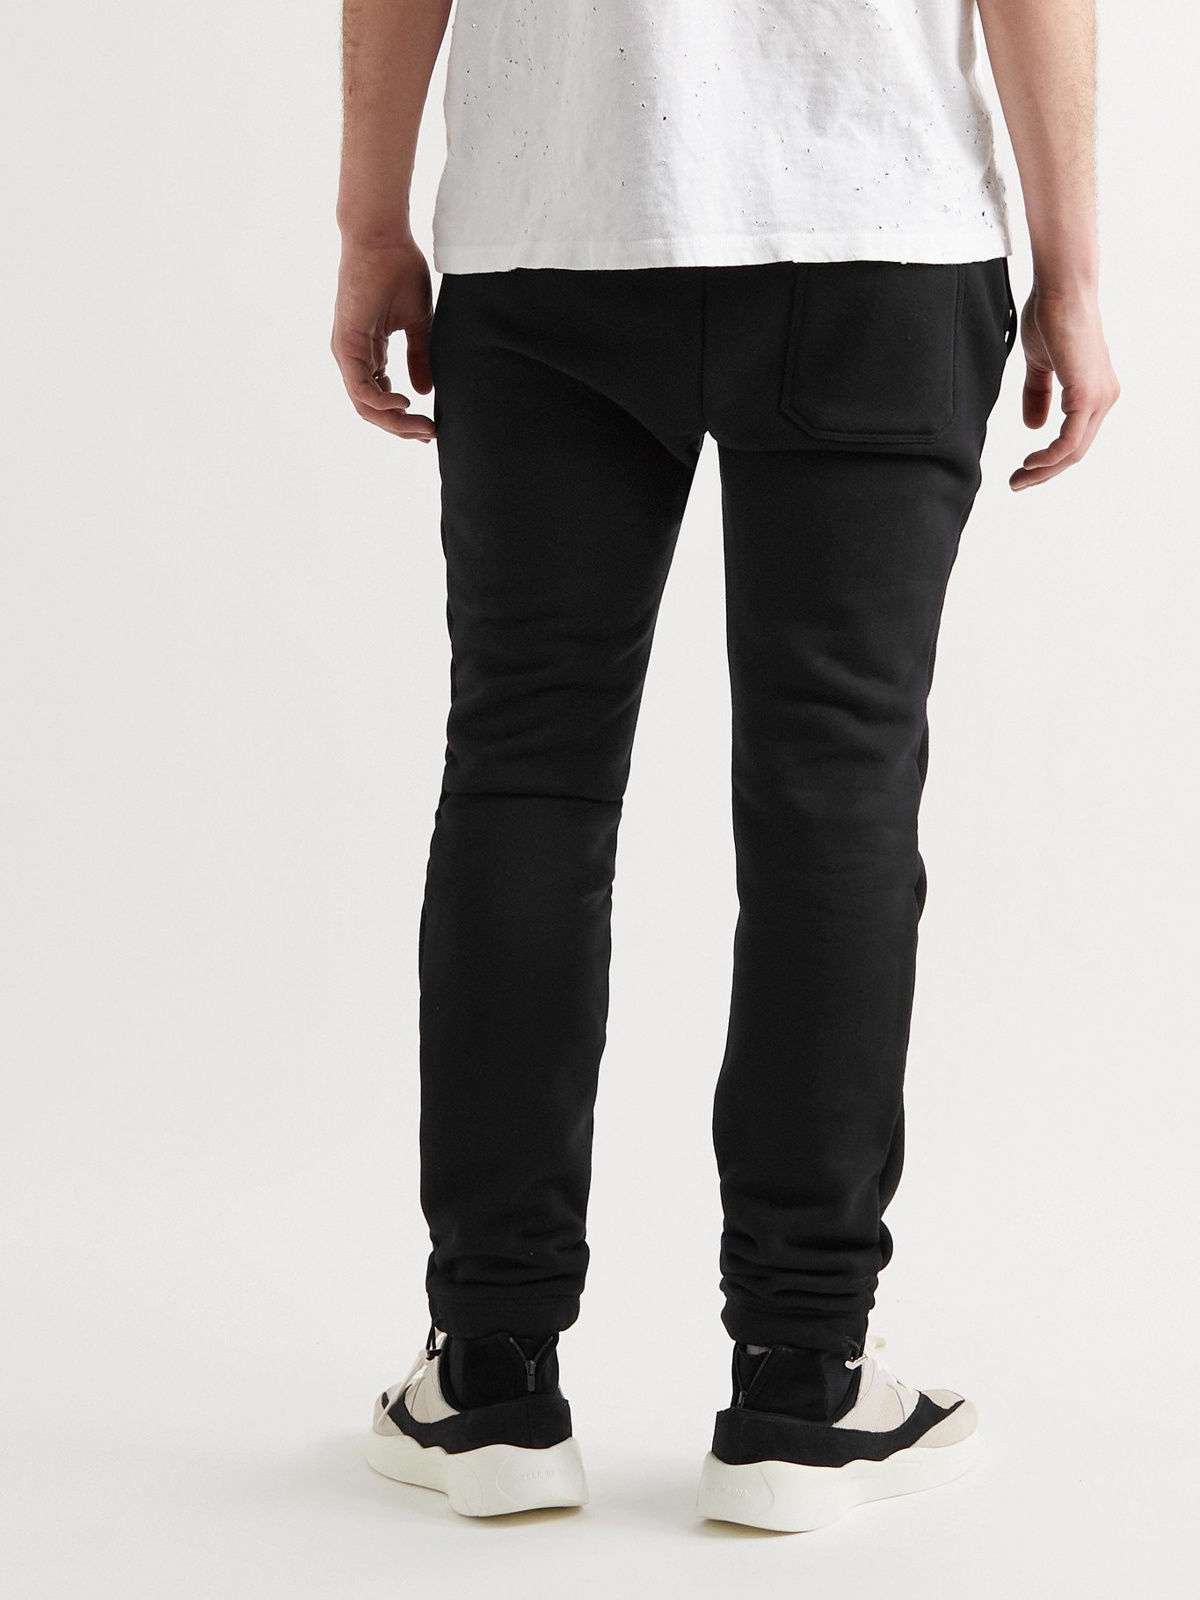 RRR123 Tapered logo-print Cotton-jersey Sweatpants - Men - Black Sweats - S